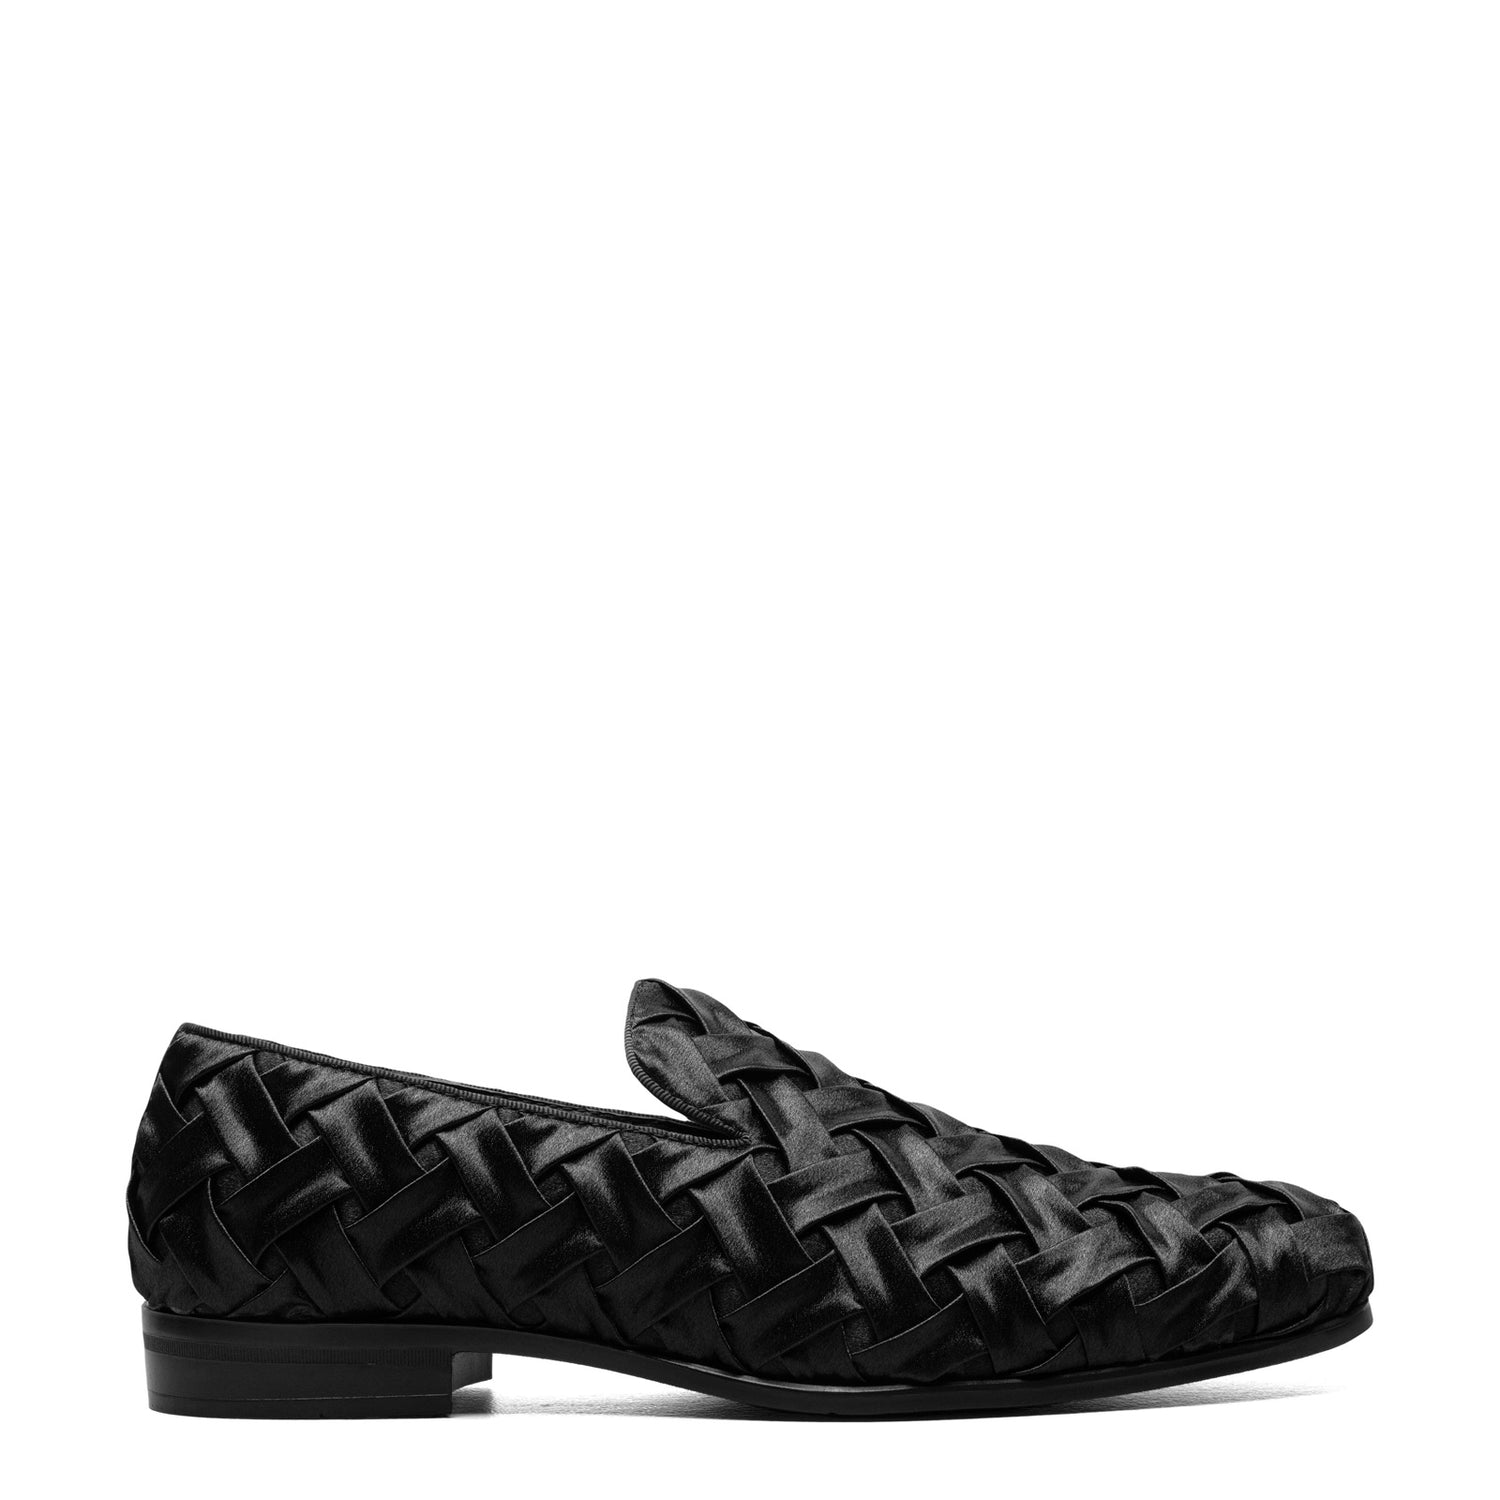 Peltz Shoes  Men's Stacy Adams Savior Loafer Black 25611-001